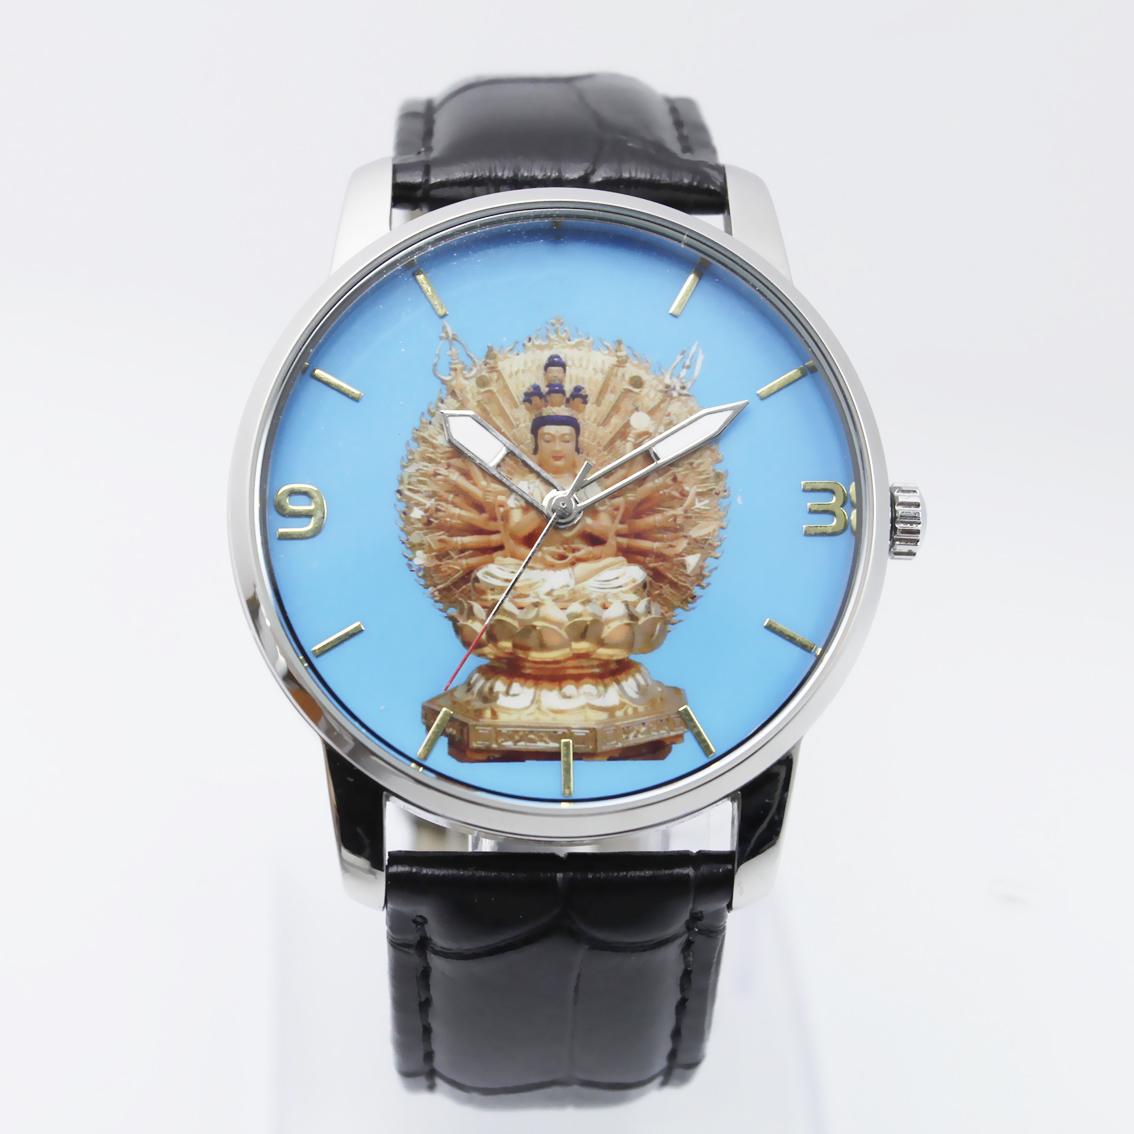 #02055Men's wristwatch quartz analog leather strap watch